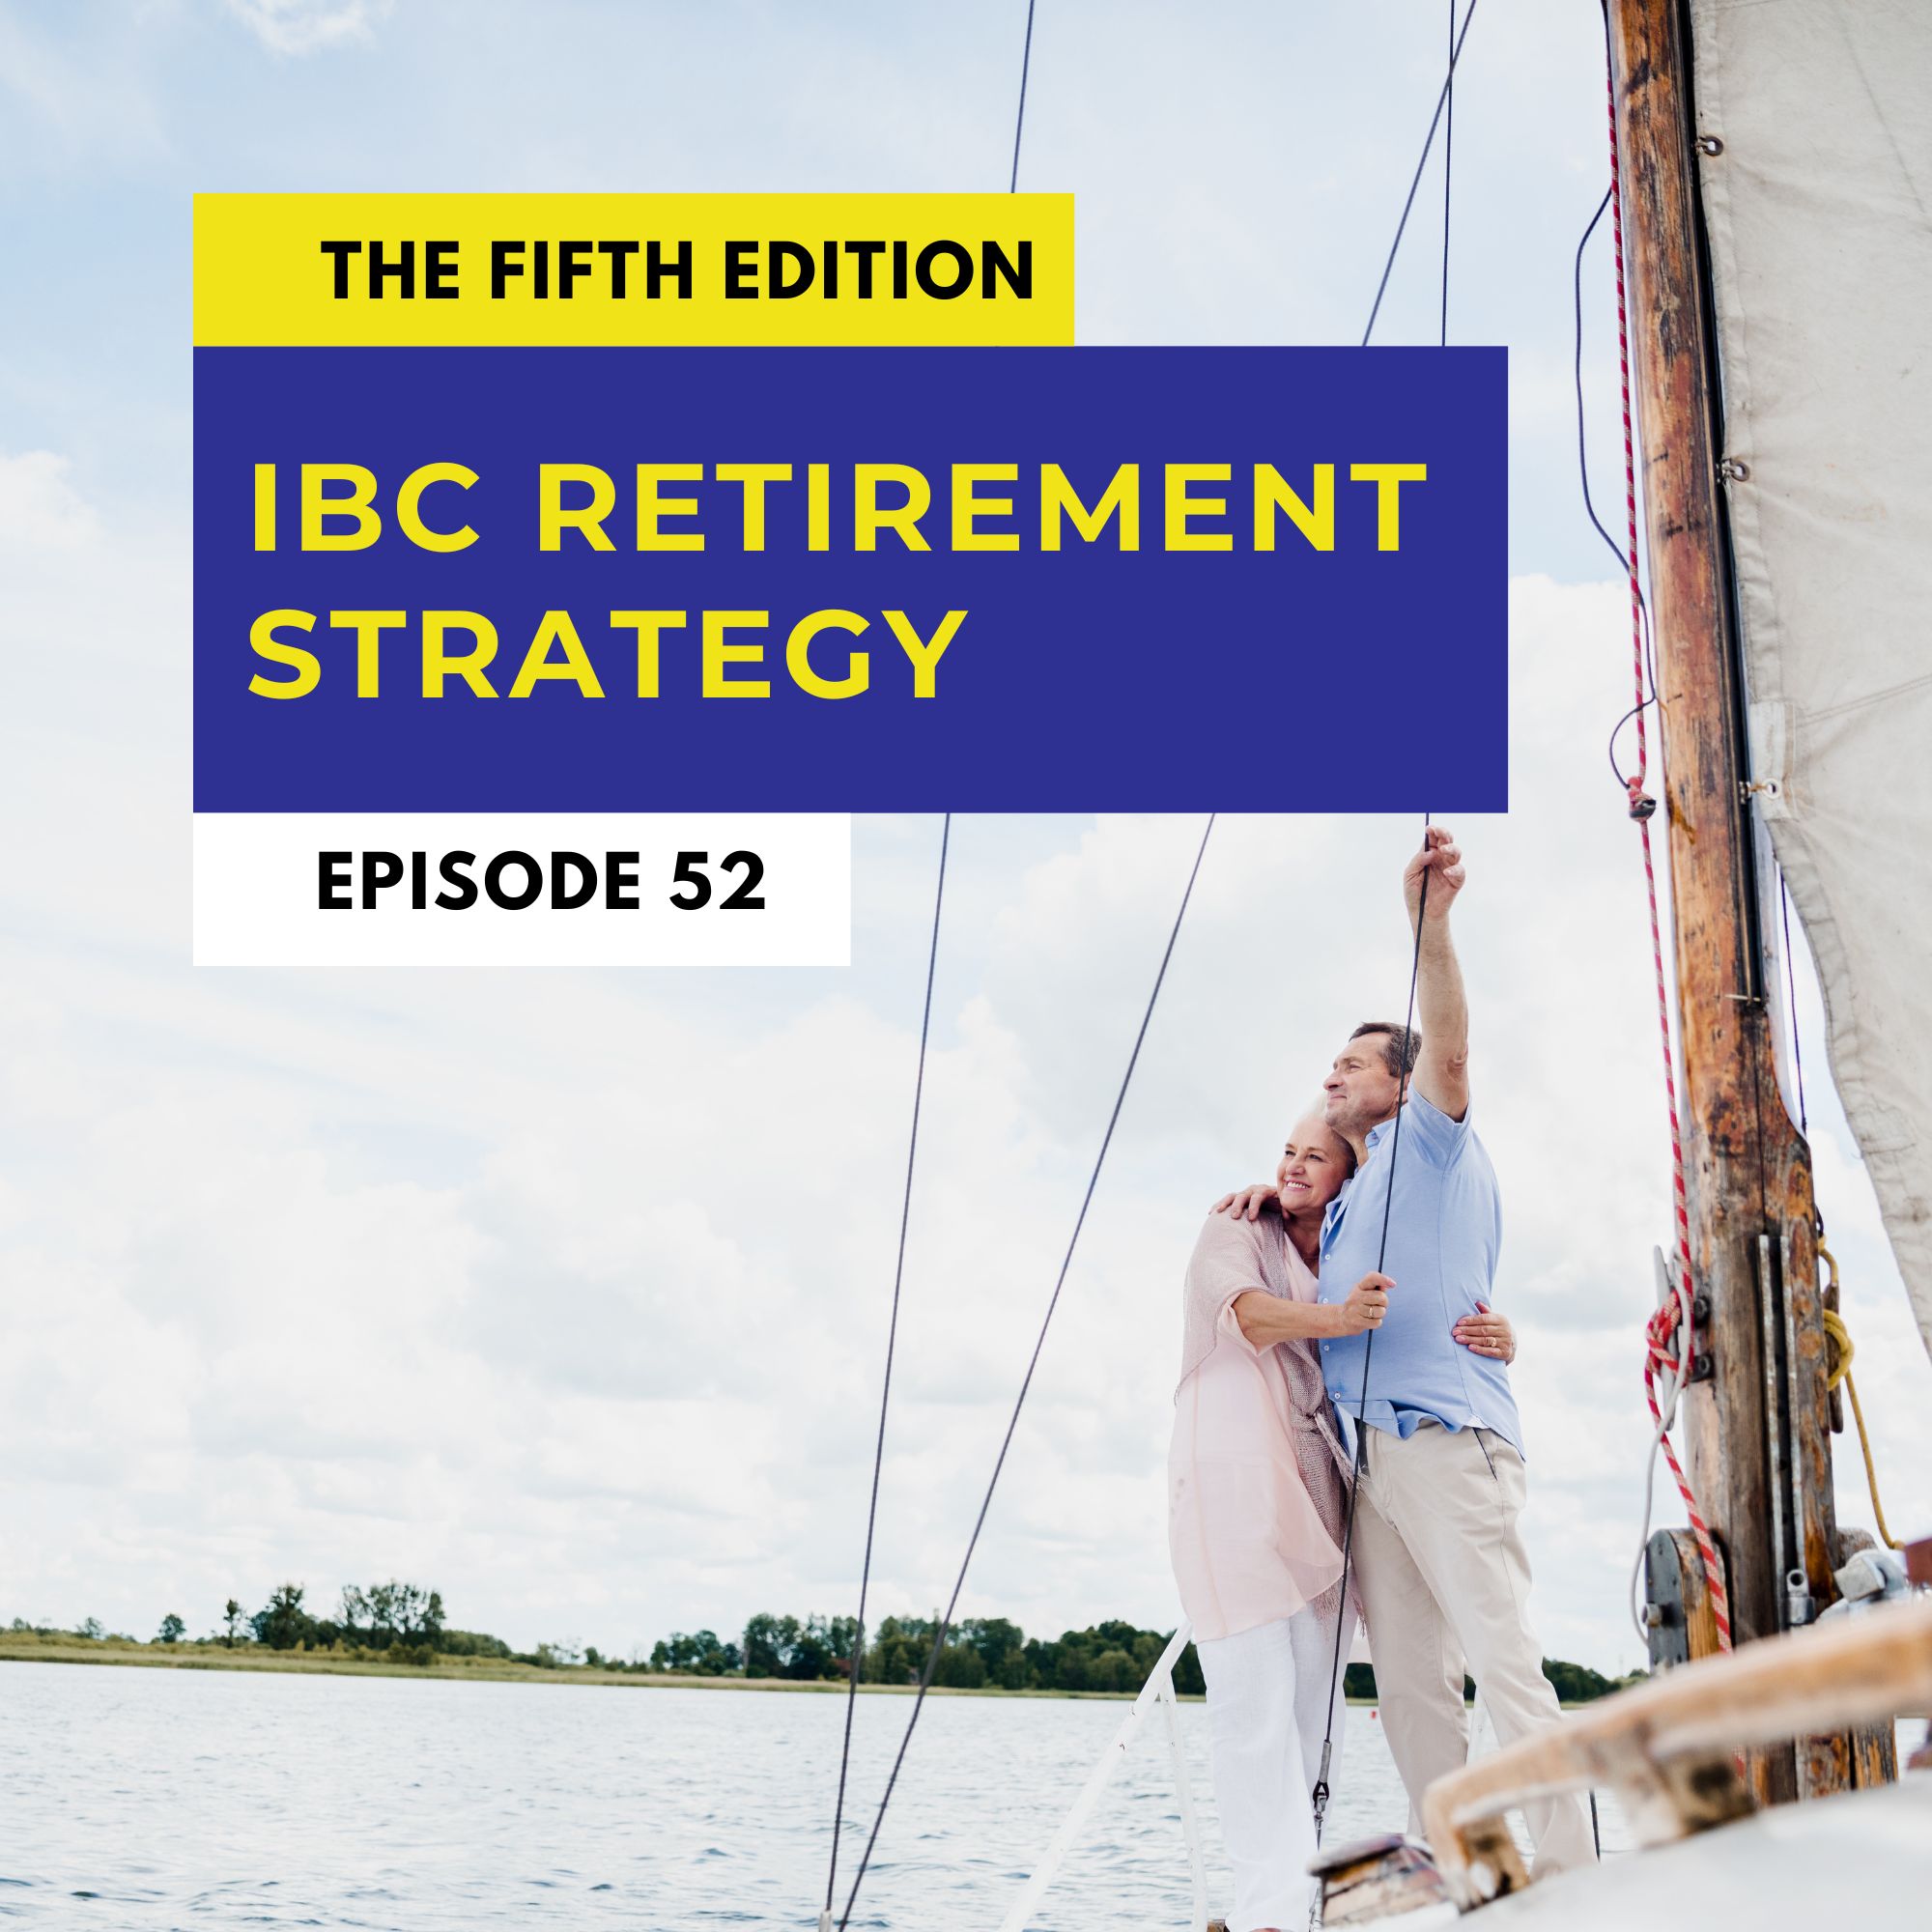 An IBC Retirement Strategy Image